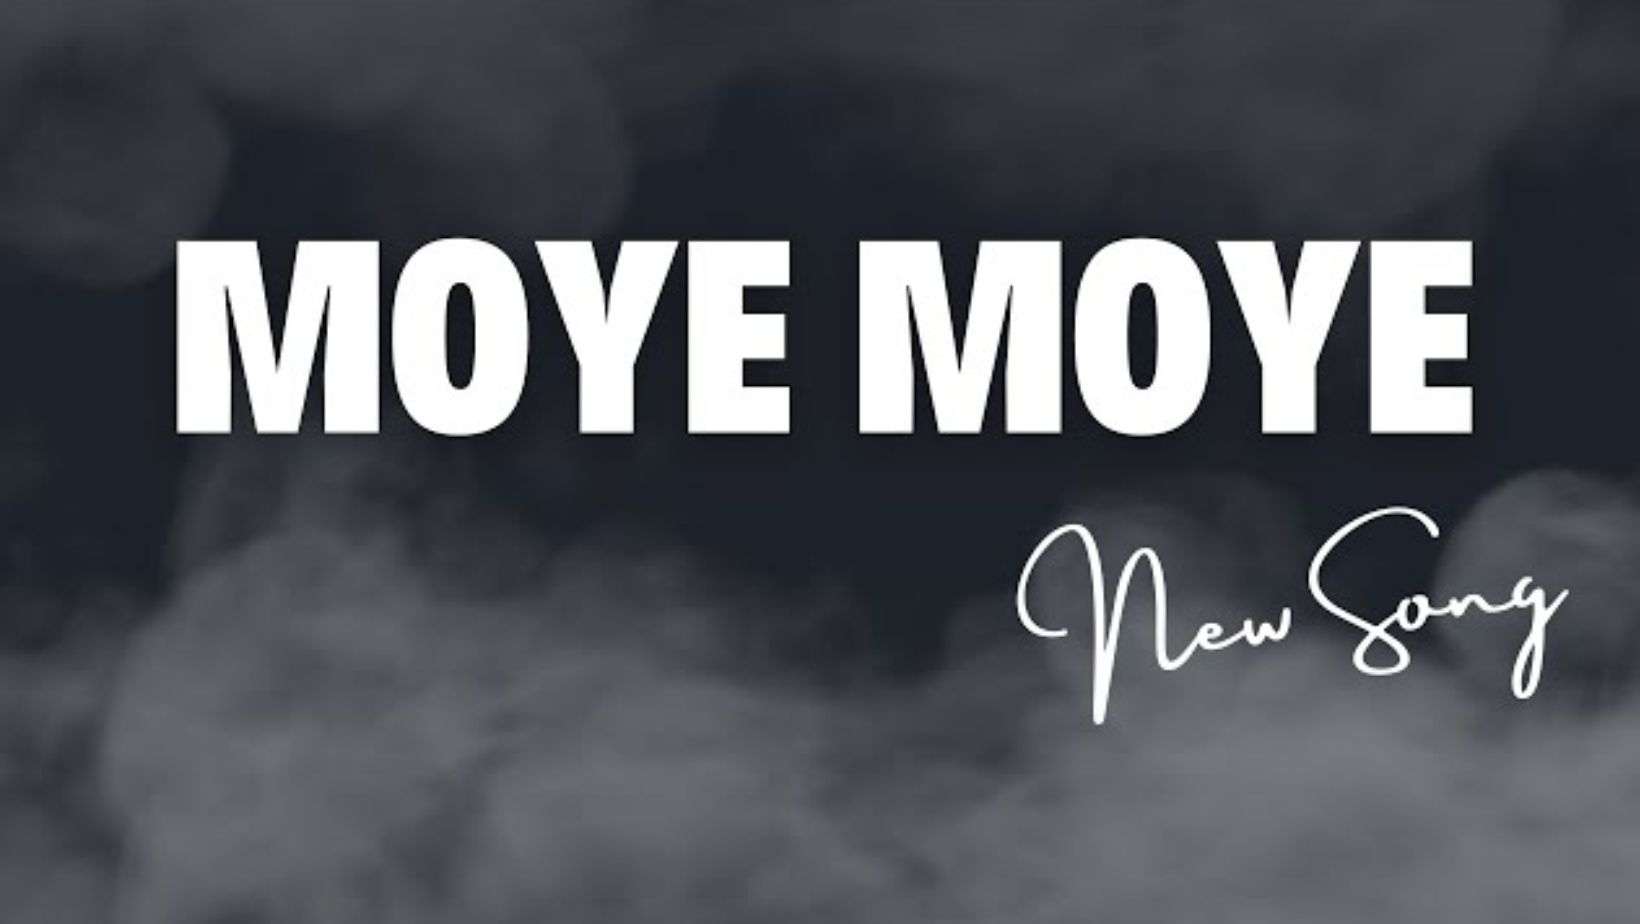 Moye Moye Lyrics In English